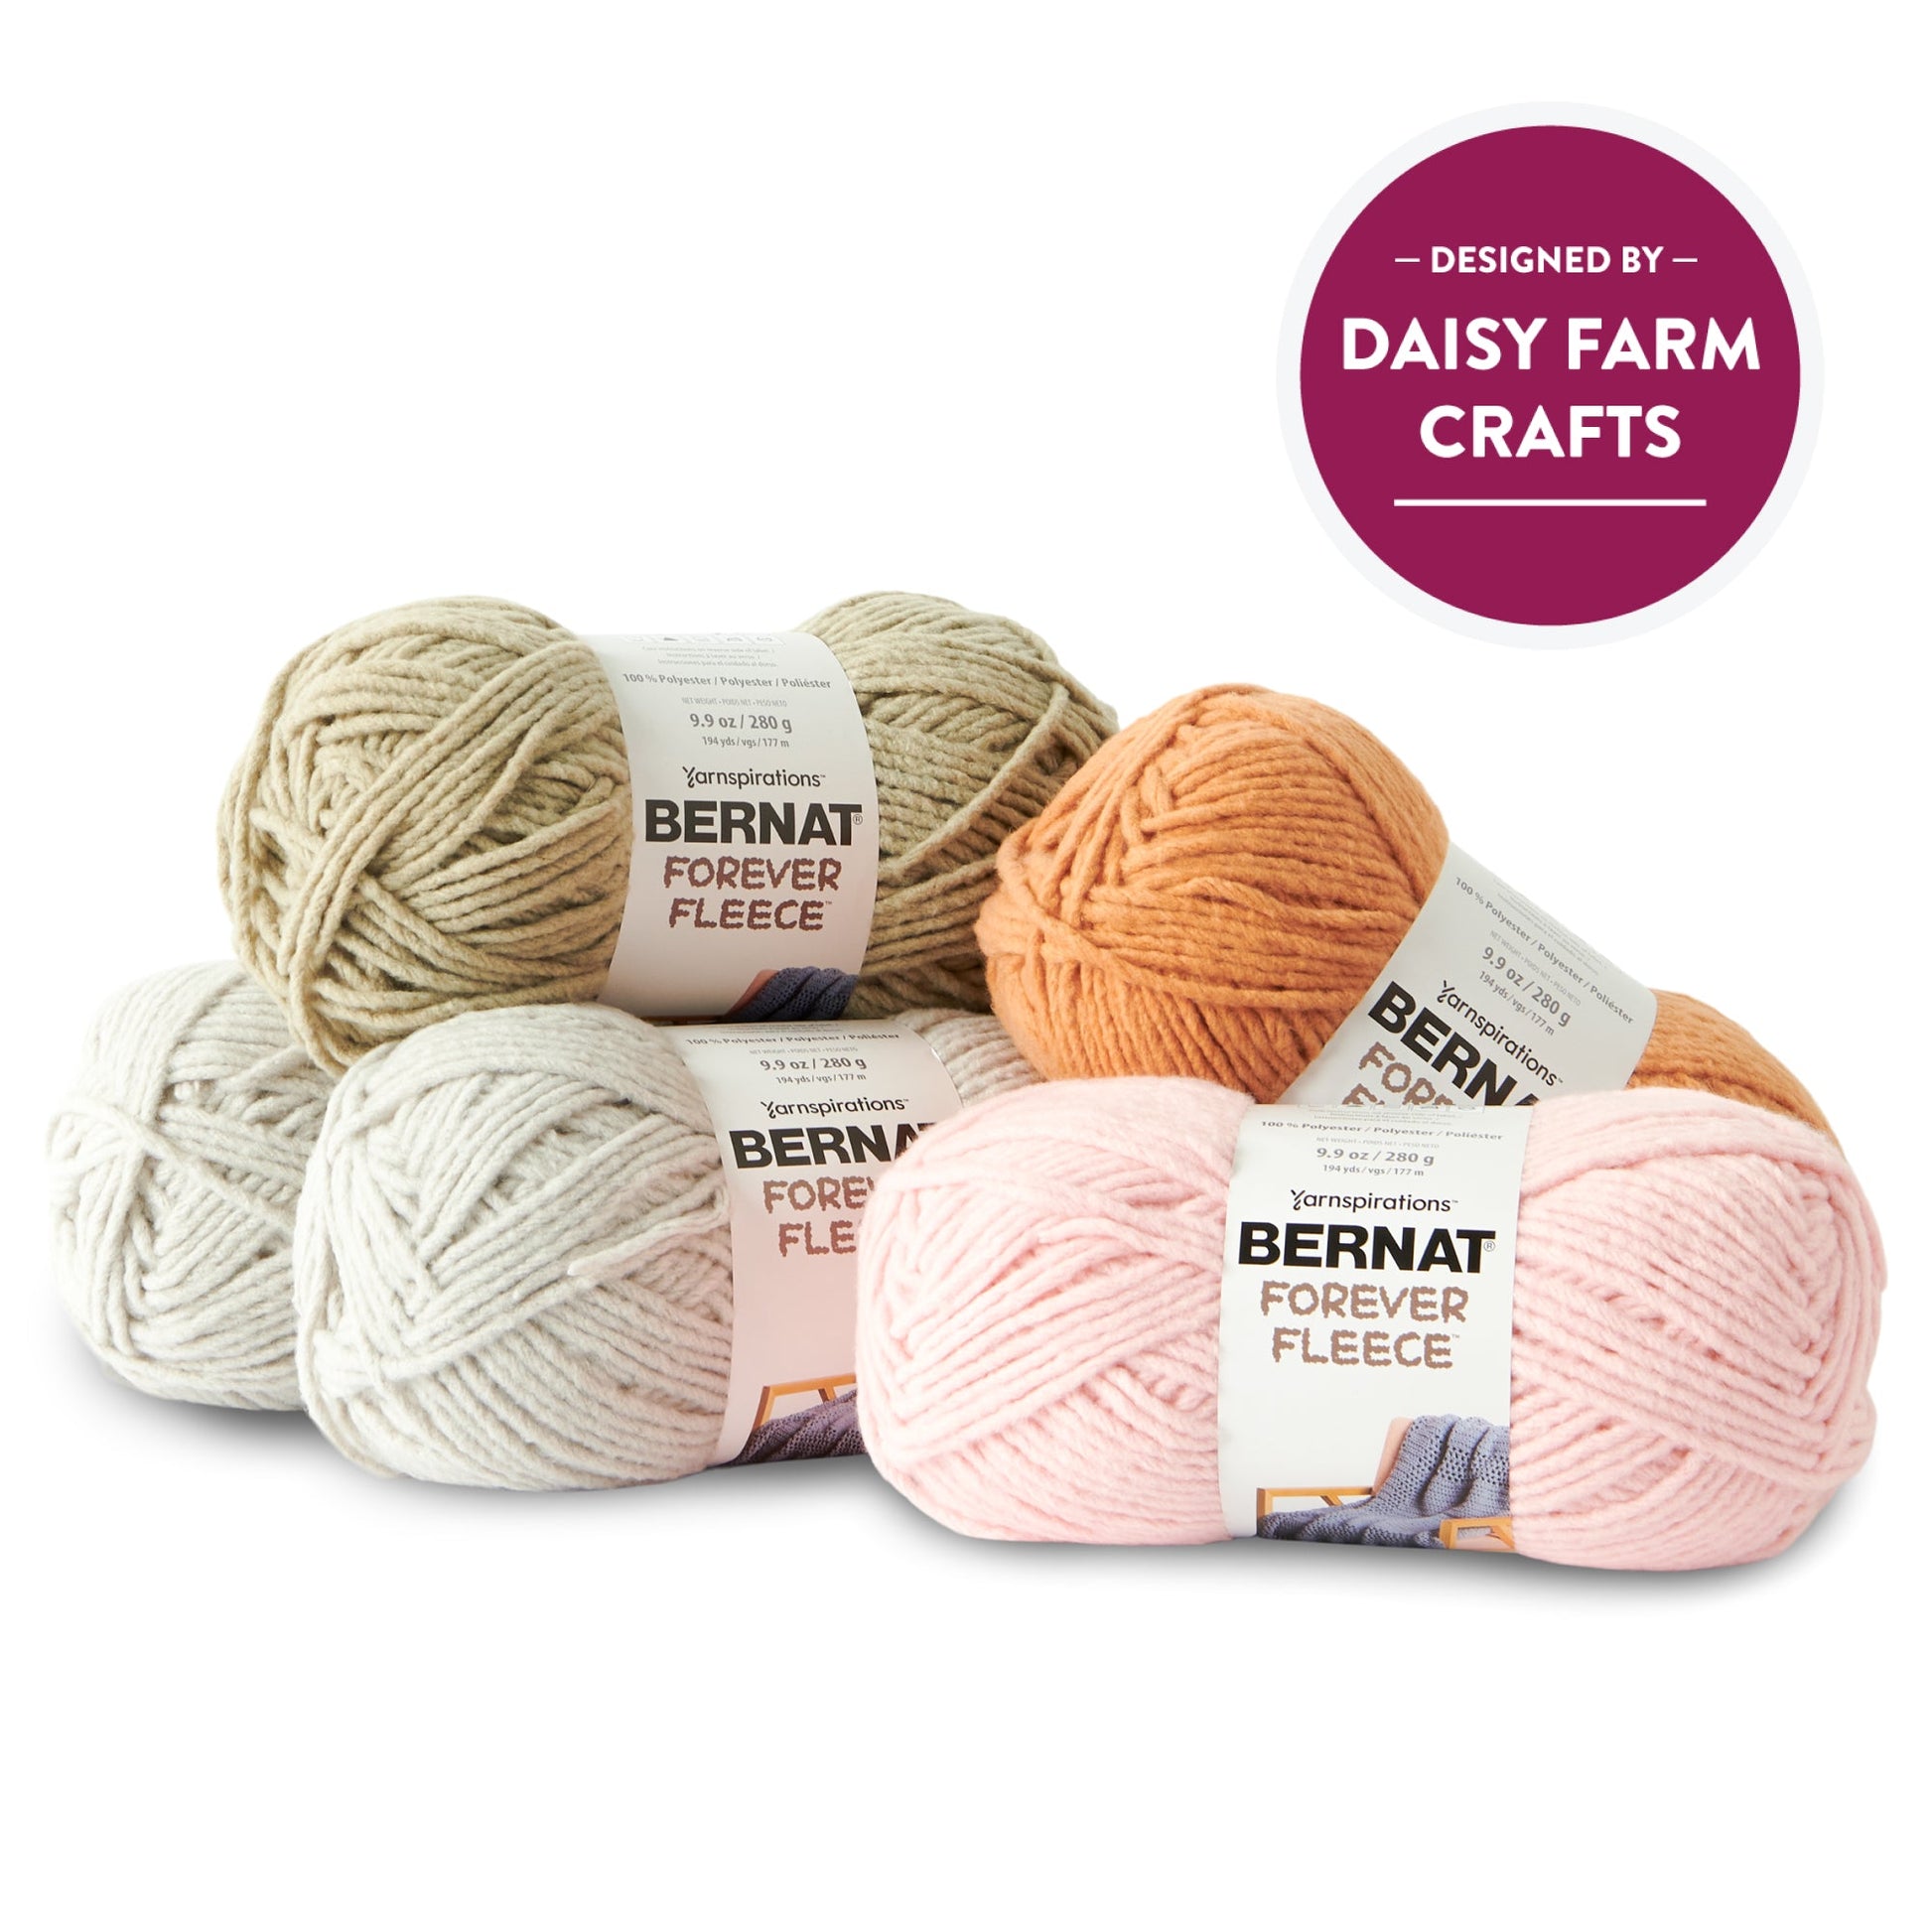 Bernat Daisy Farm Crafts Curated Forever Fleece Box | Pattern: Crochet | by Yarnspirations